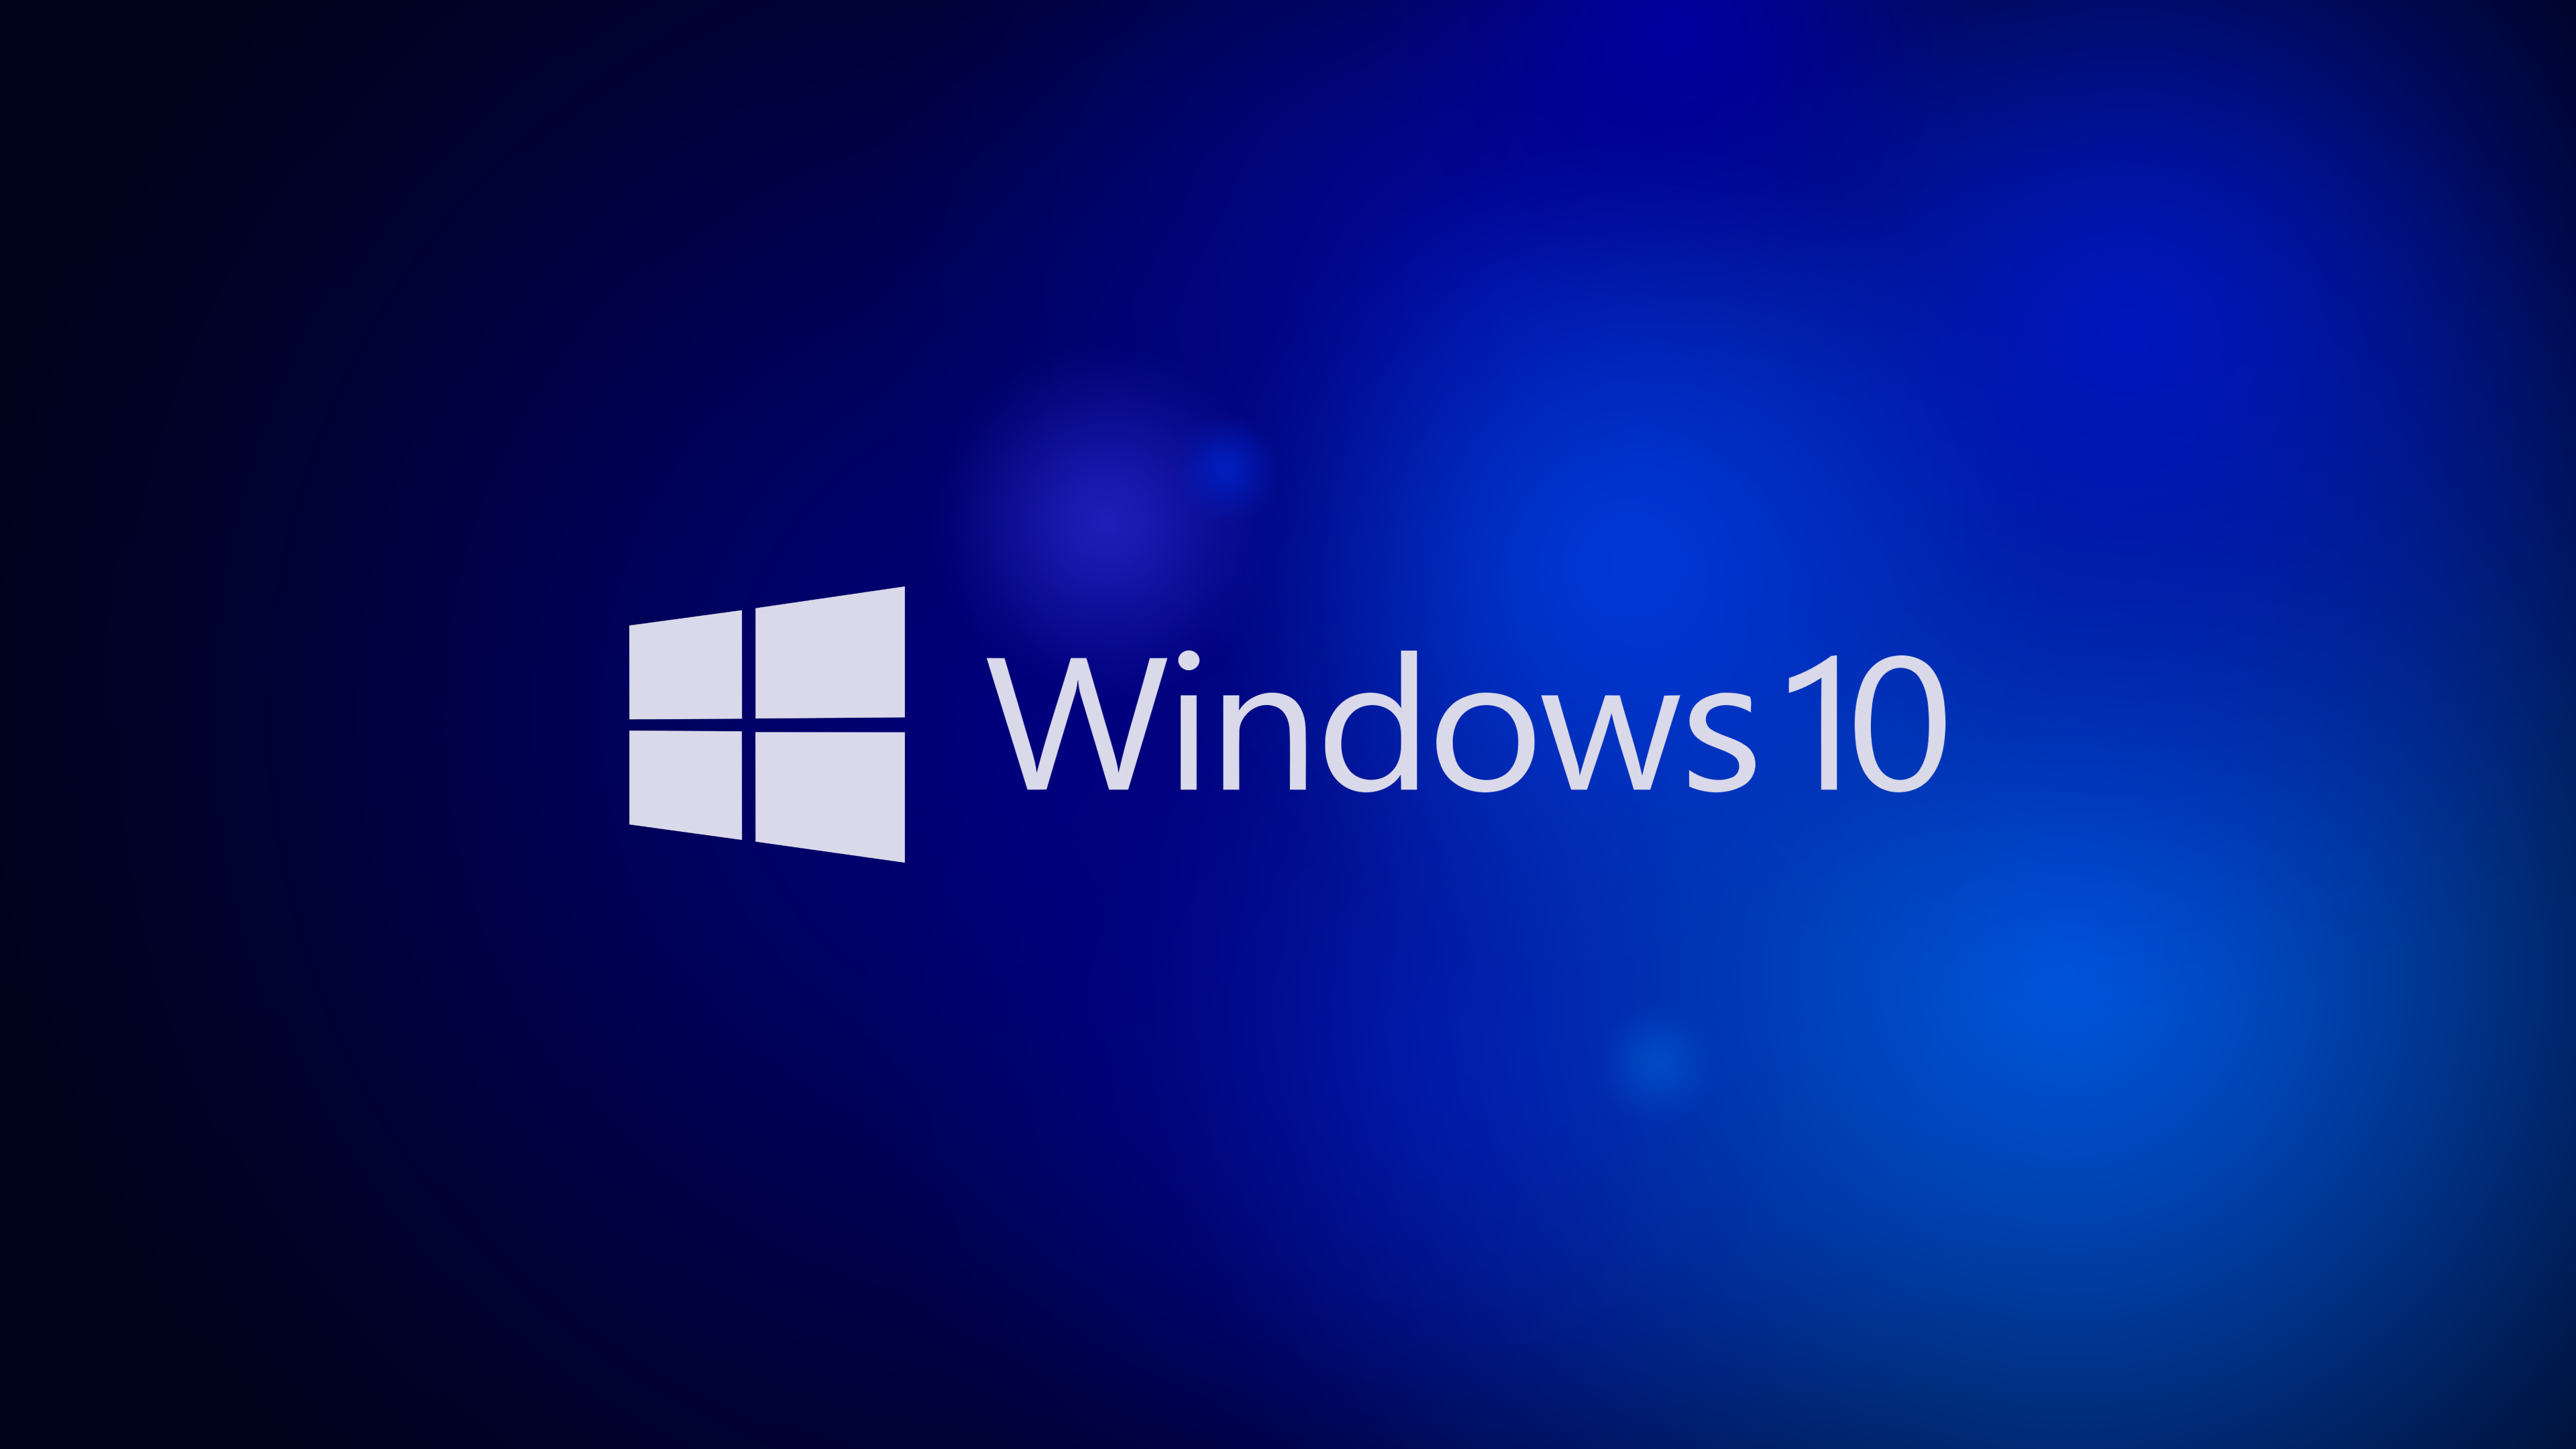 View Windows 10 2160P 4K Wallpaper For Pc UK - Roy N. Woodward